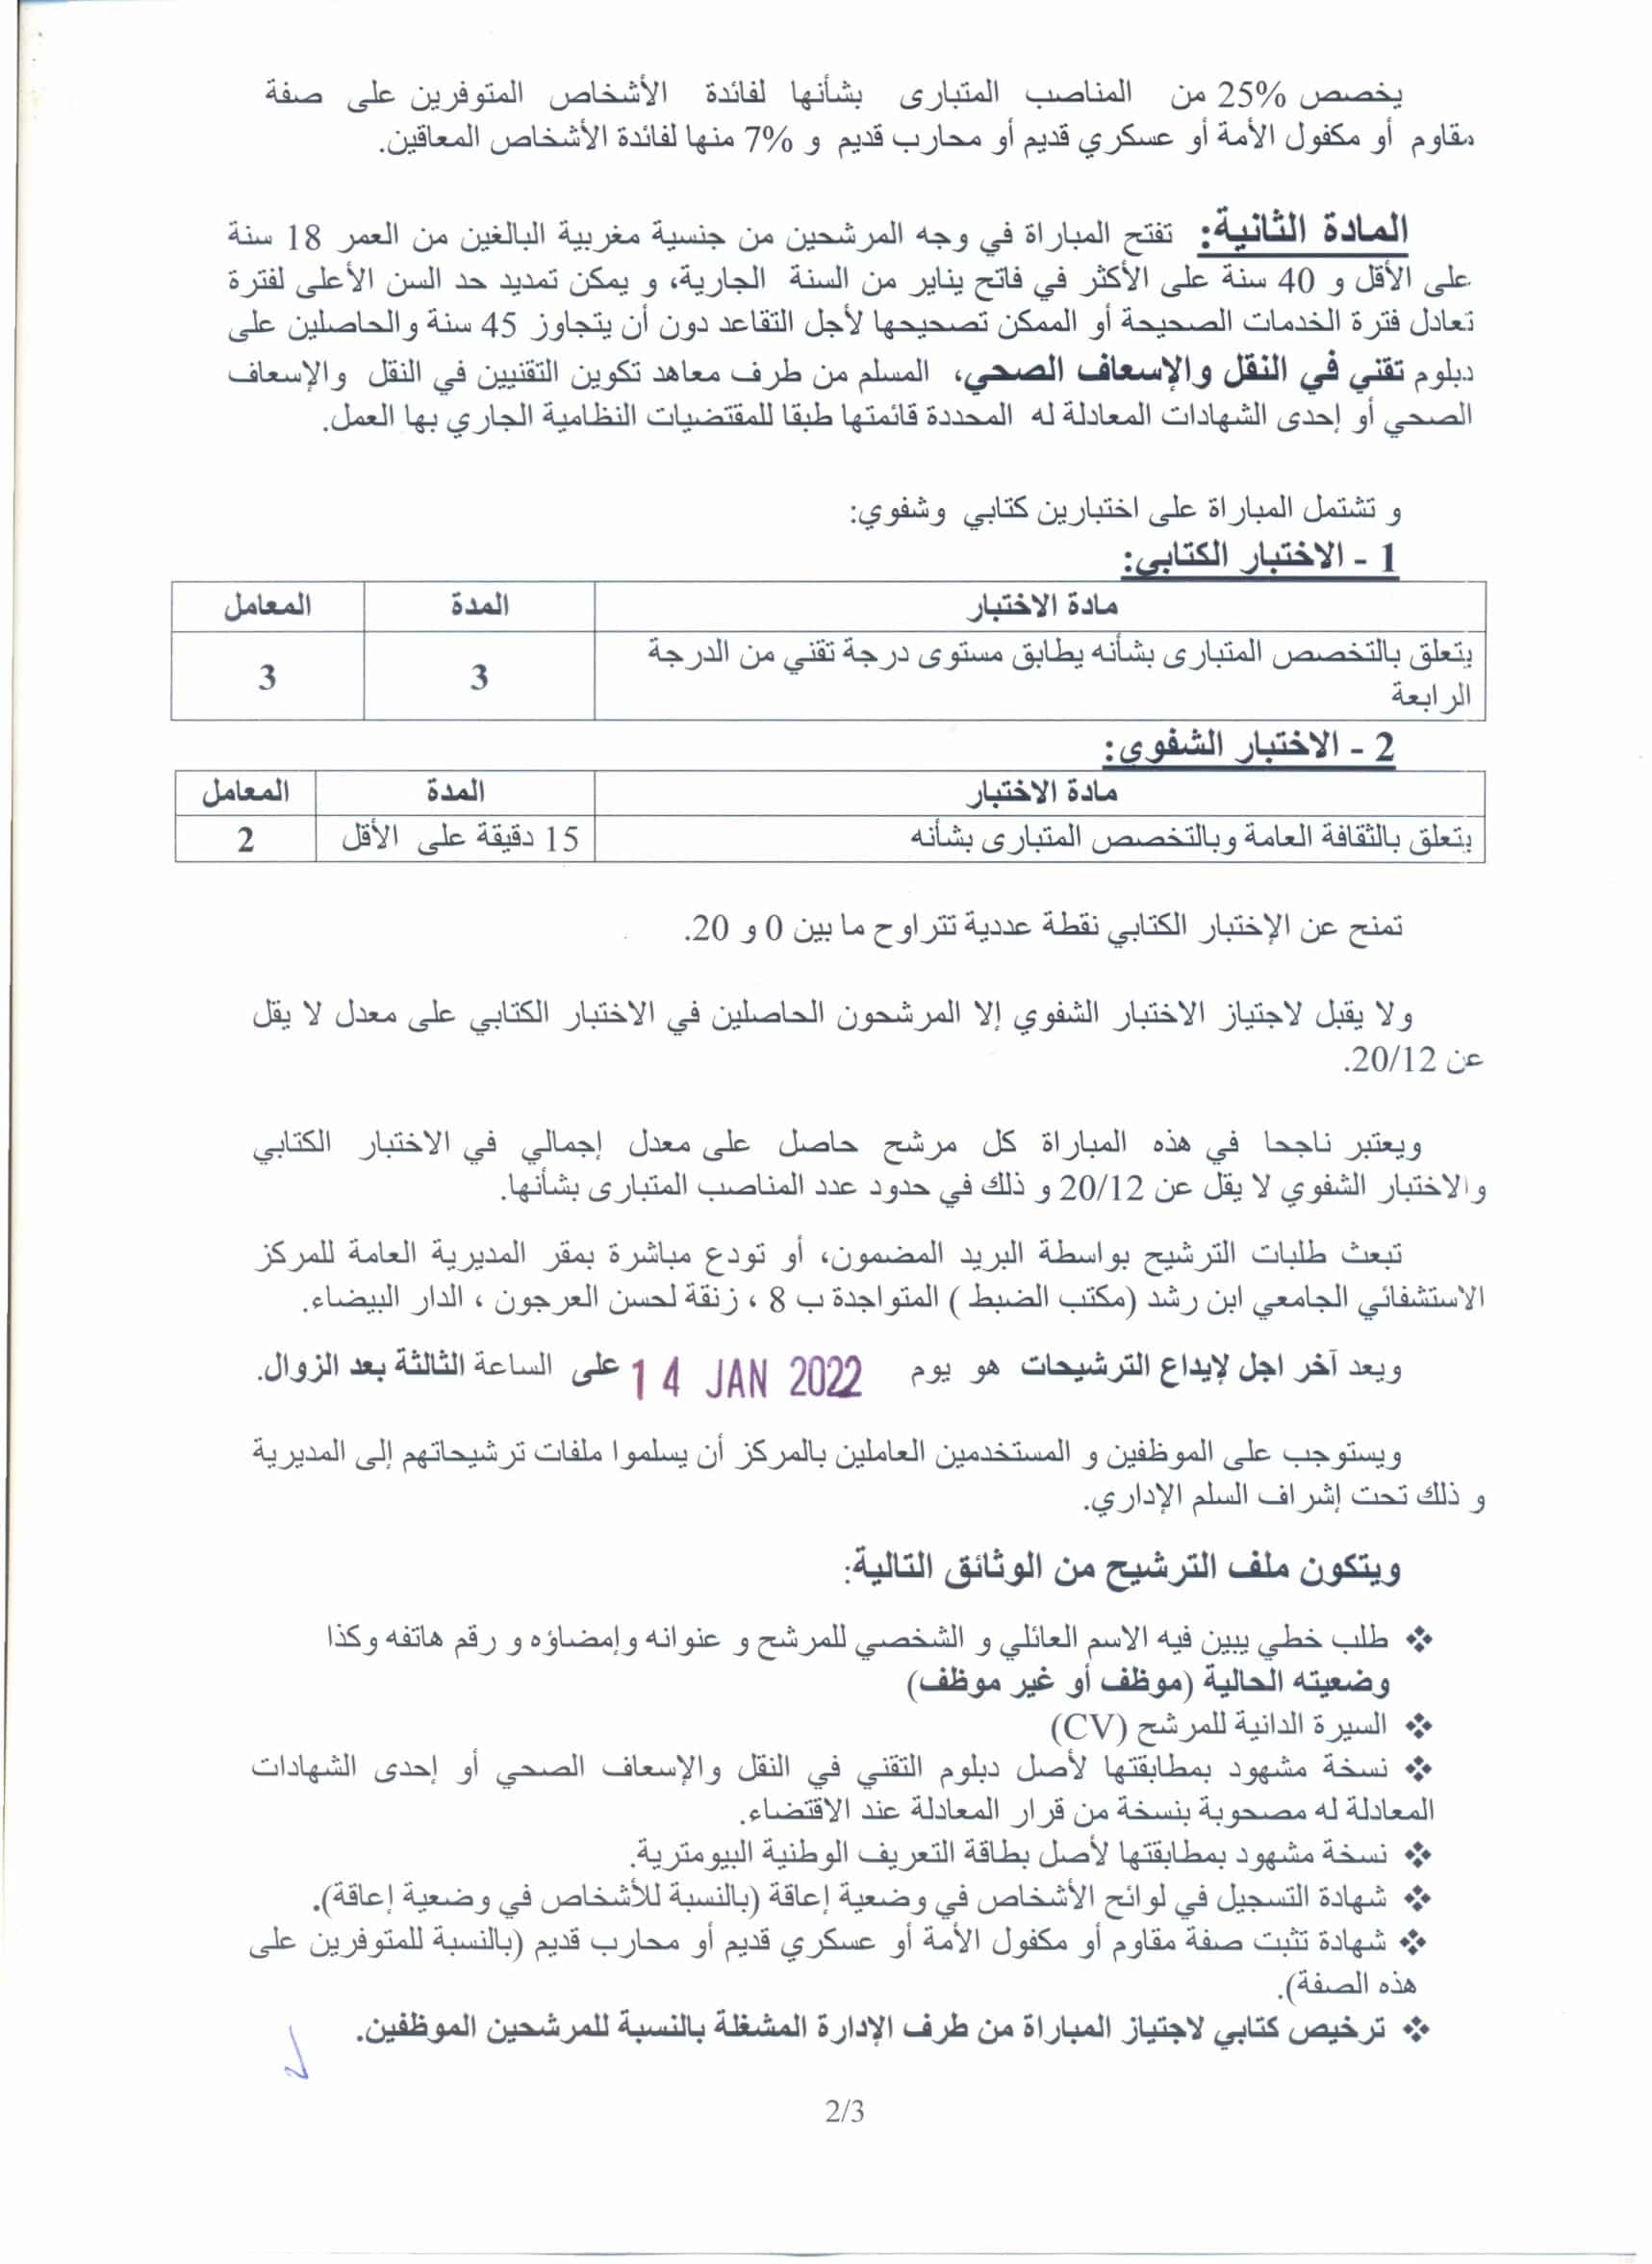 recrutementtech4G 2 Concours de Recrutement CHU Ibn Rochd (26 Postes)